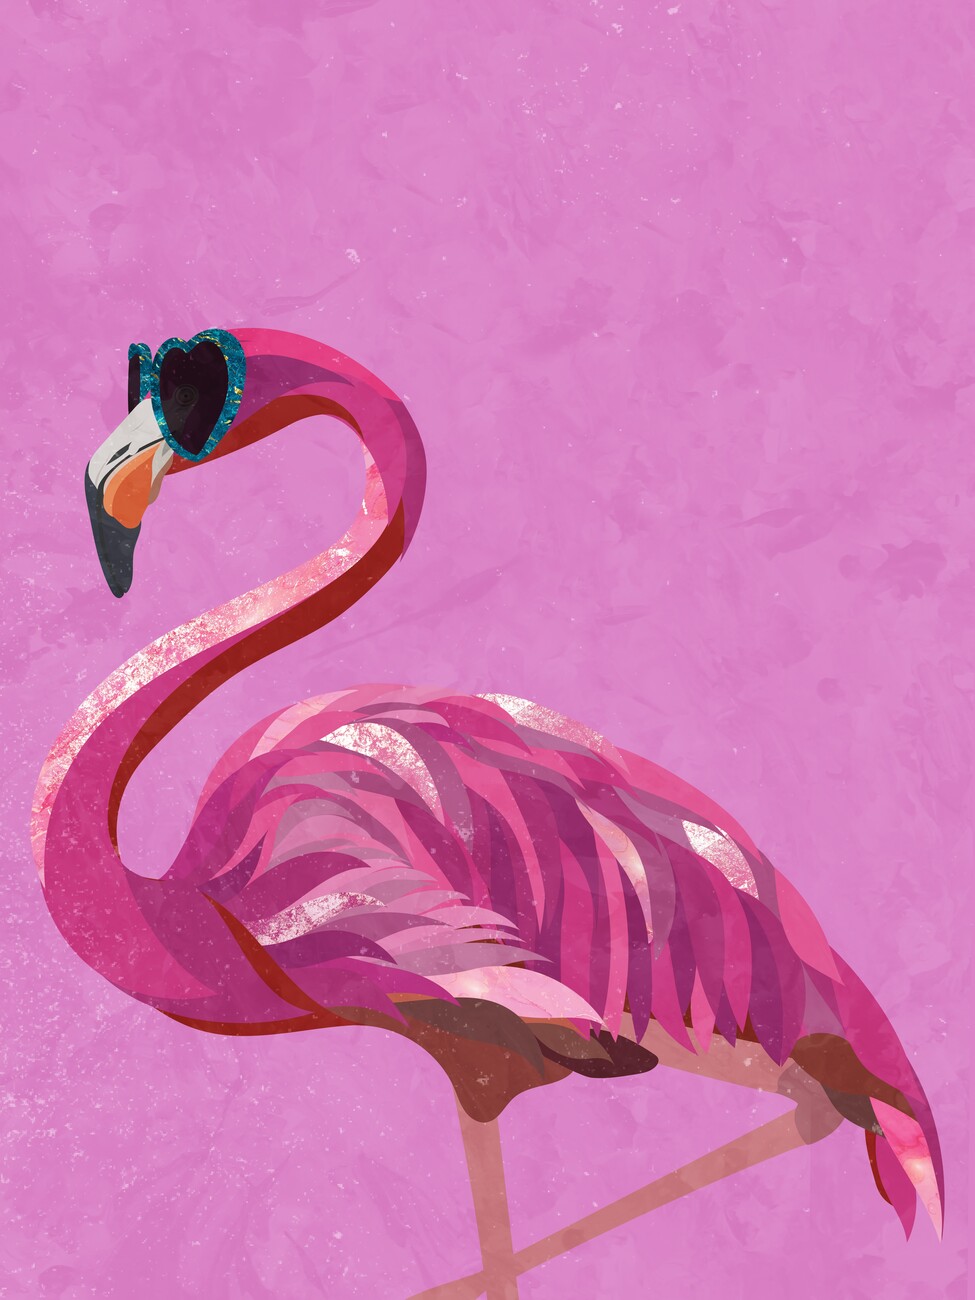 Illustration Pink flamingo